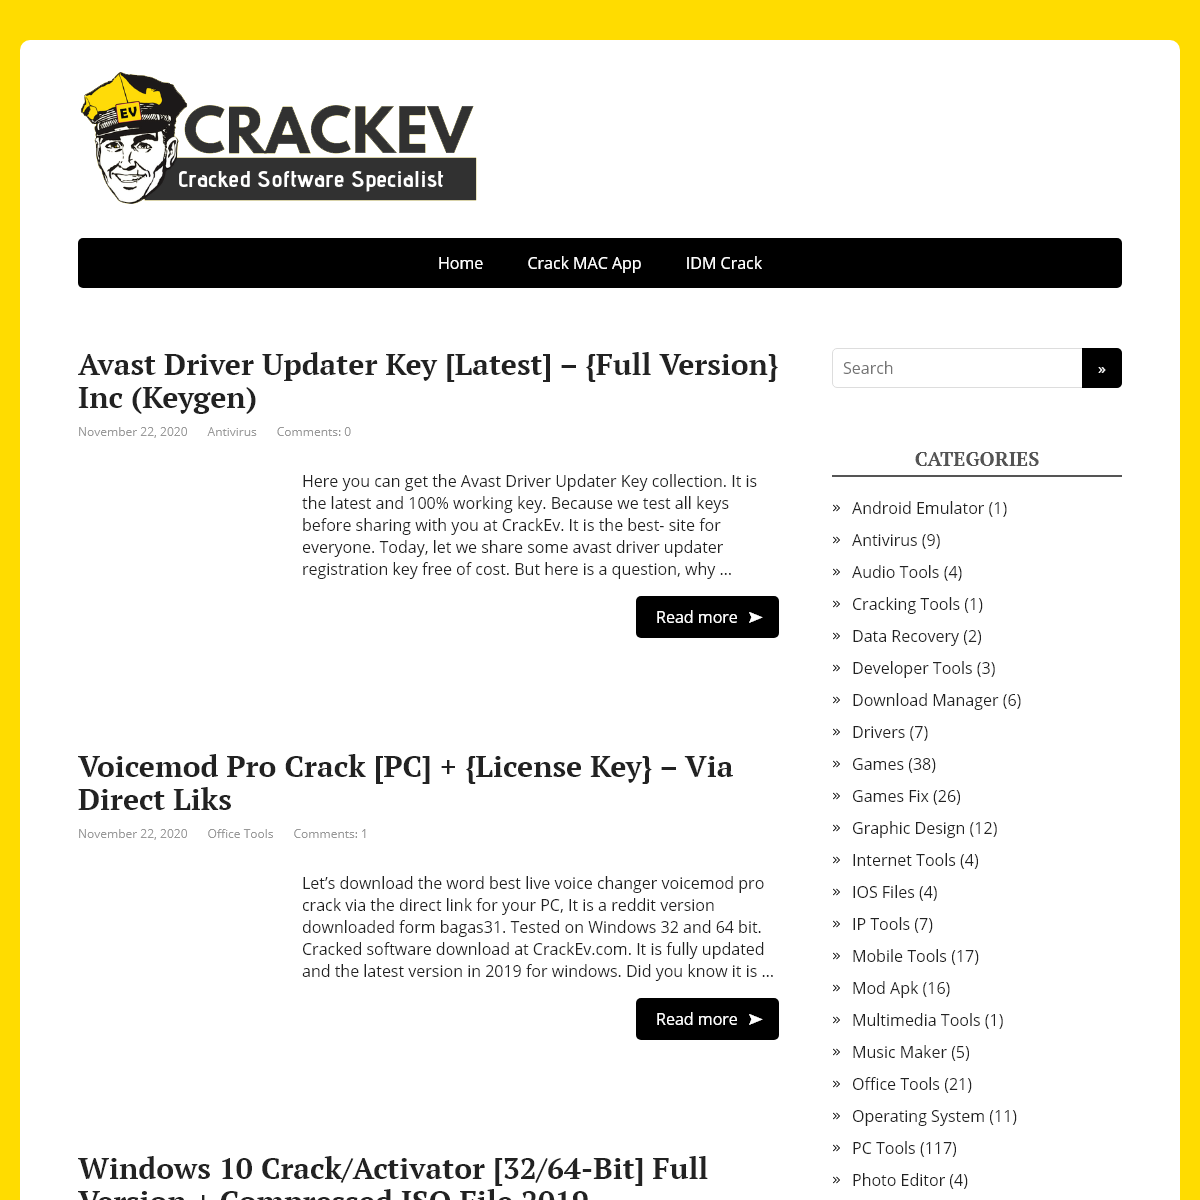 A complete backup of crackev.com